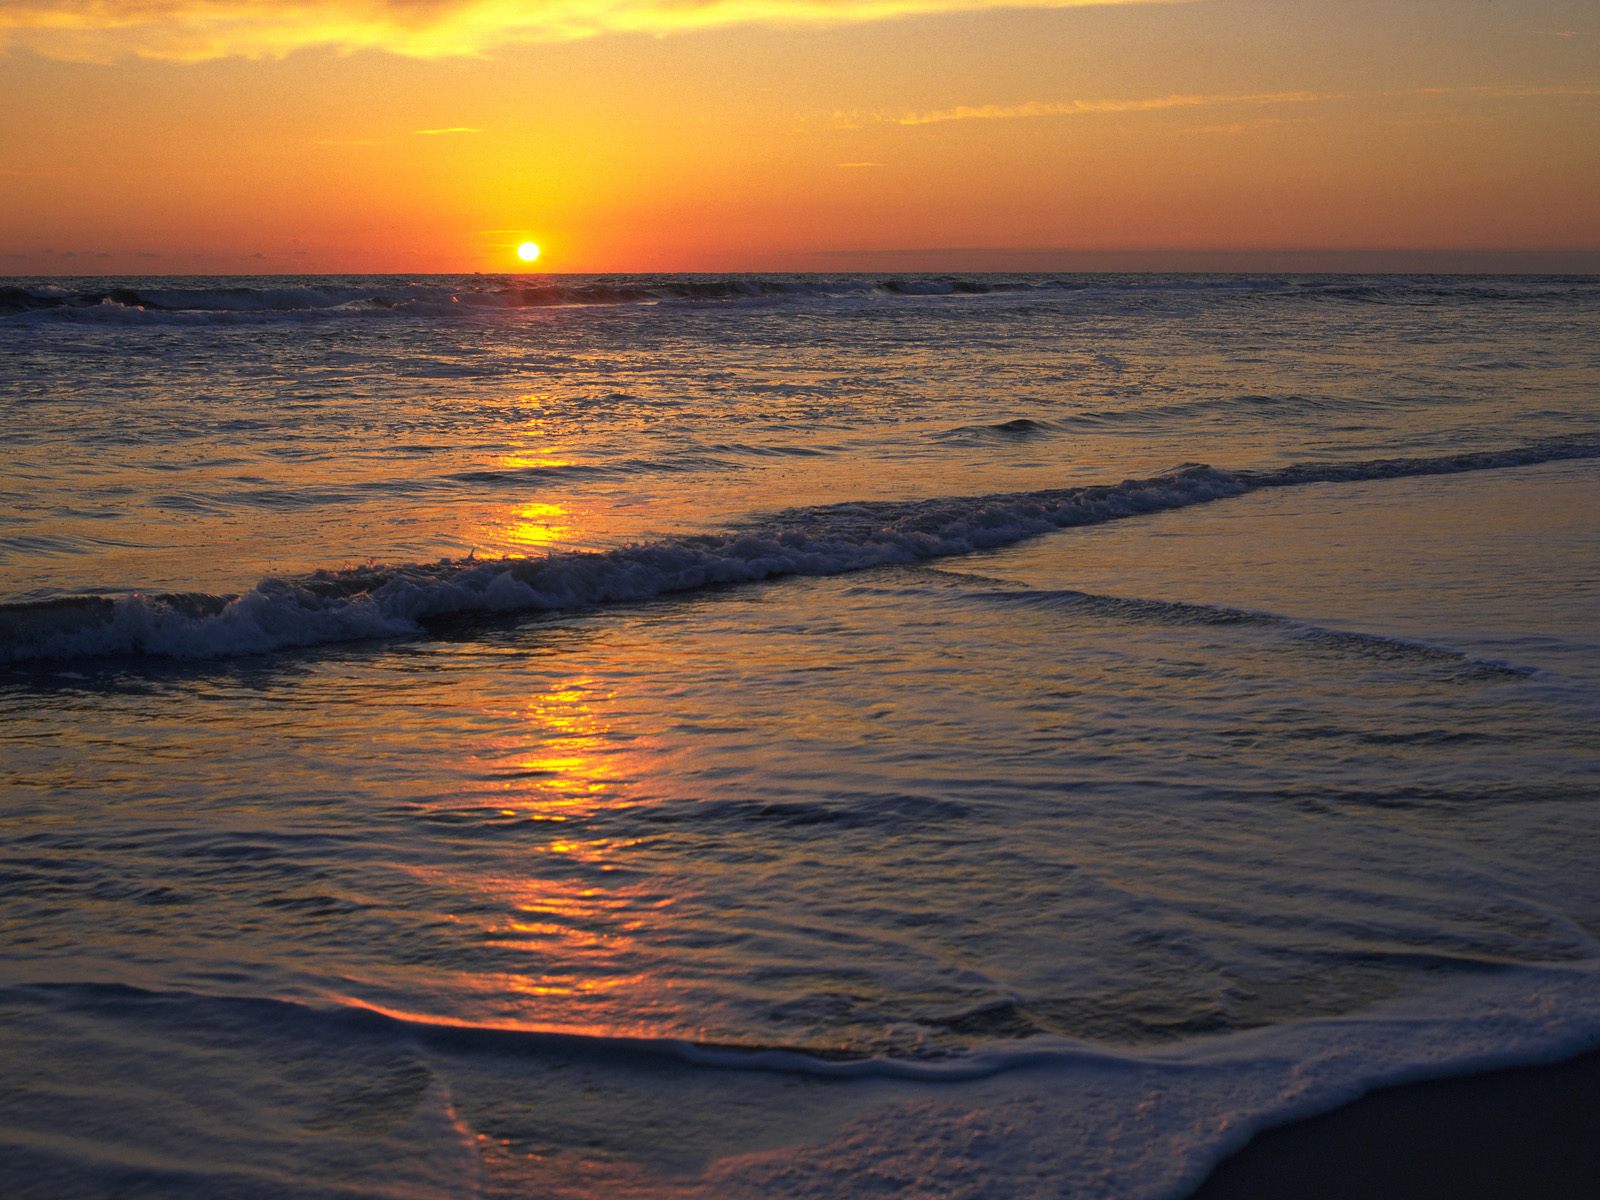 Atlantic Sunrise, Cape Hatteras National Seashore, North Carolina